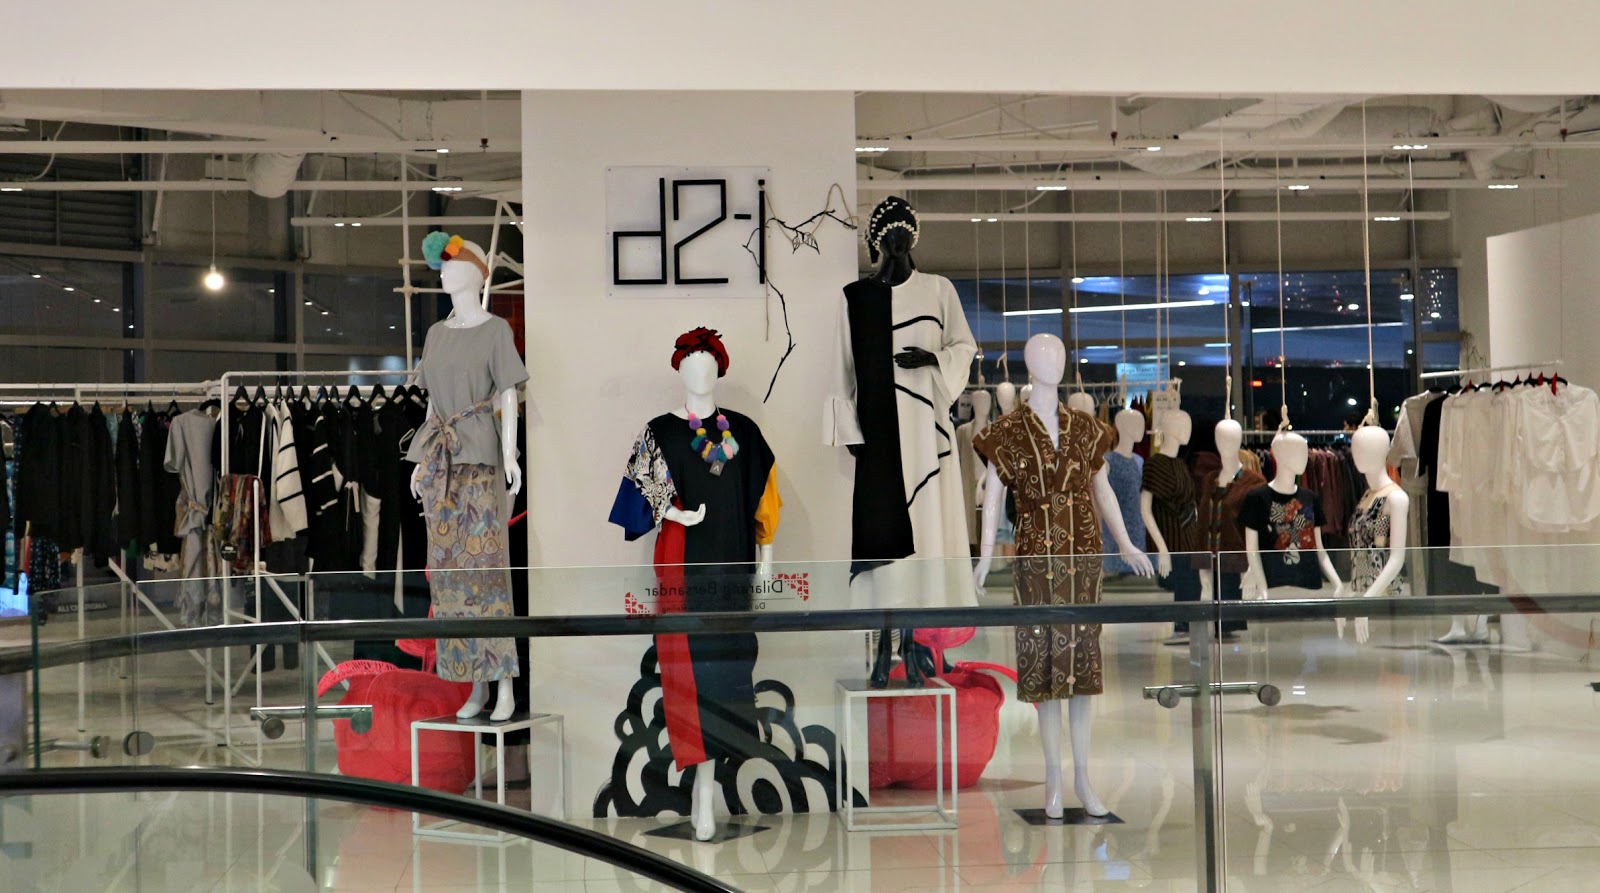 d2-i Concept Store Indonesia Fashion Chamber Neo Soho Mall